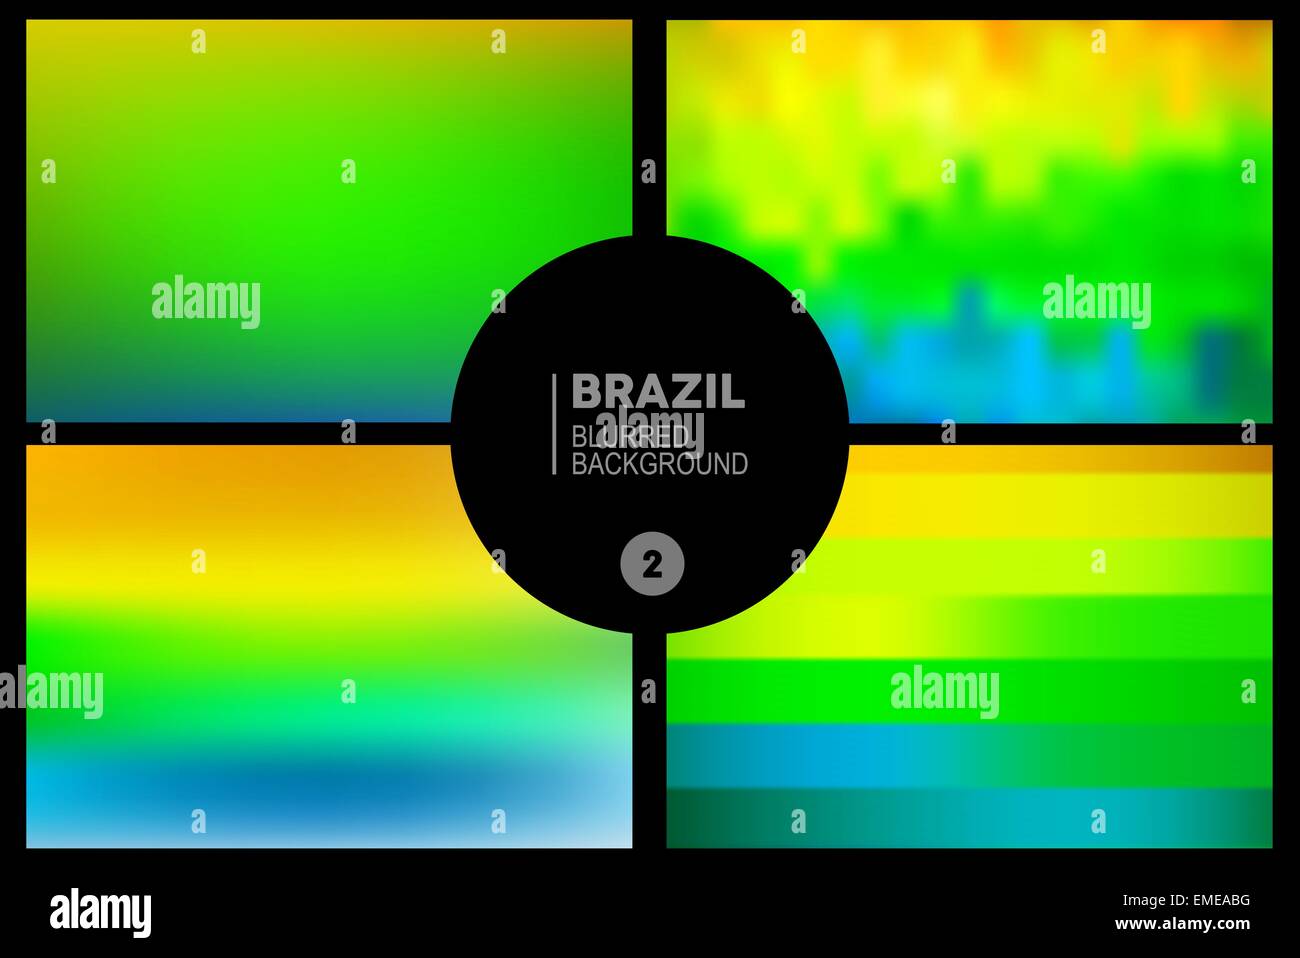 Brazil blurred backgrounds set Stock Vector